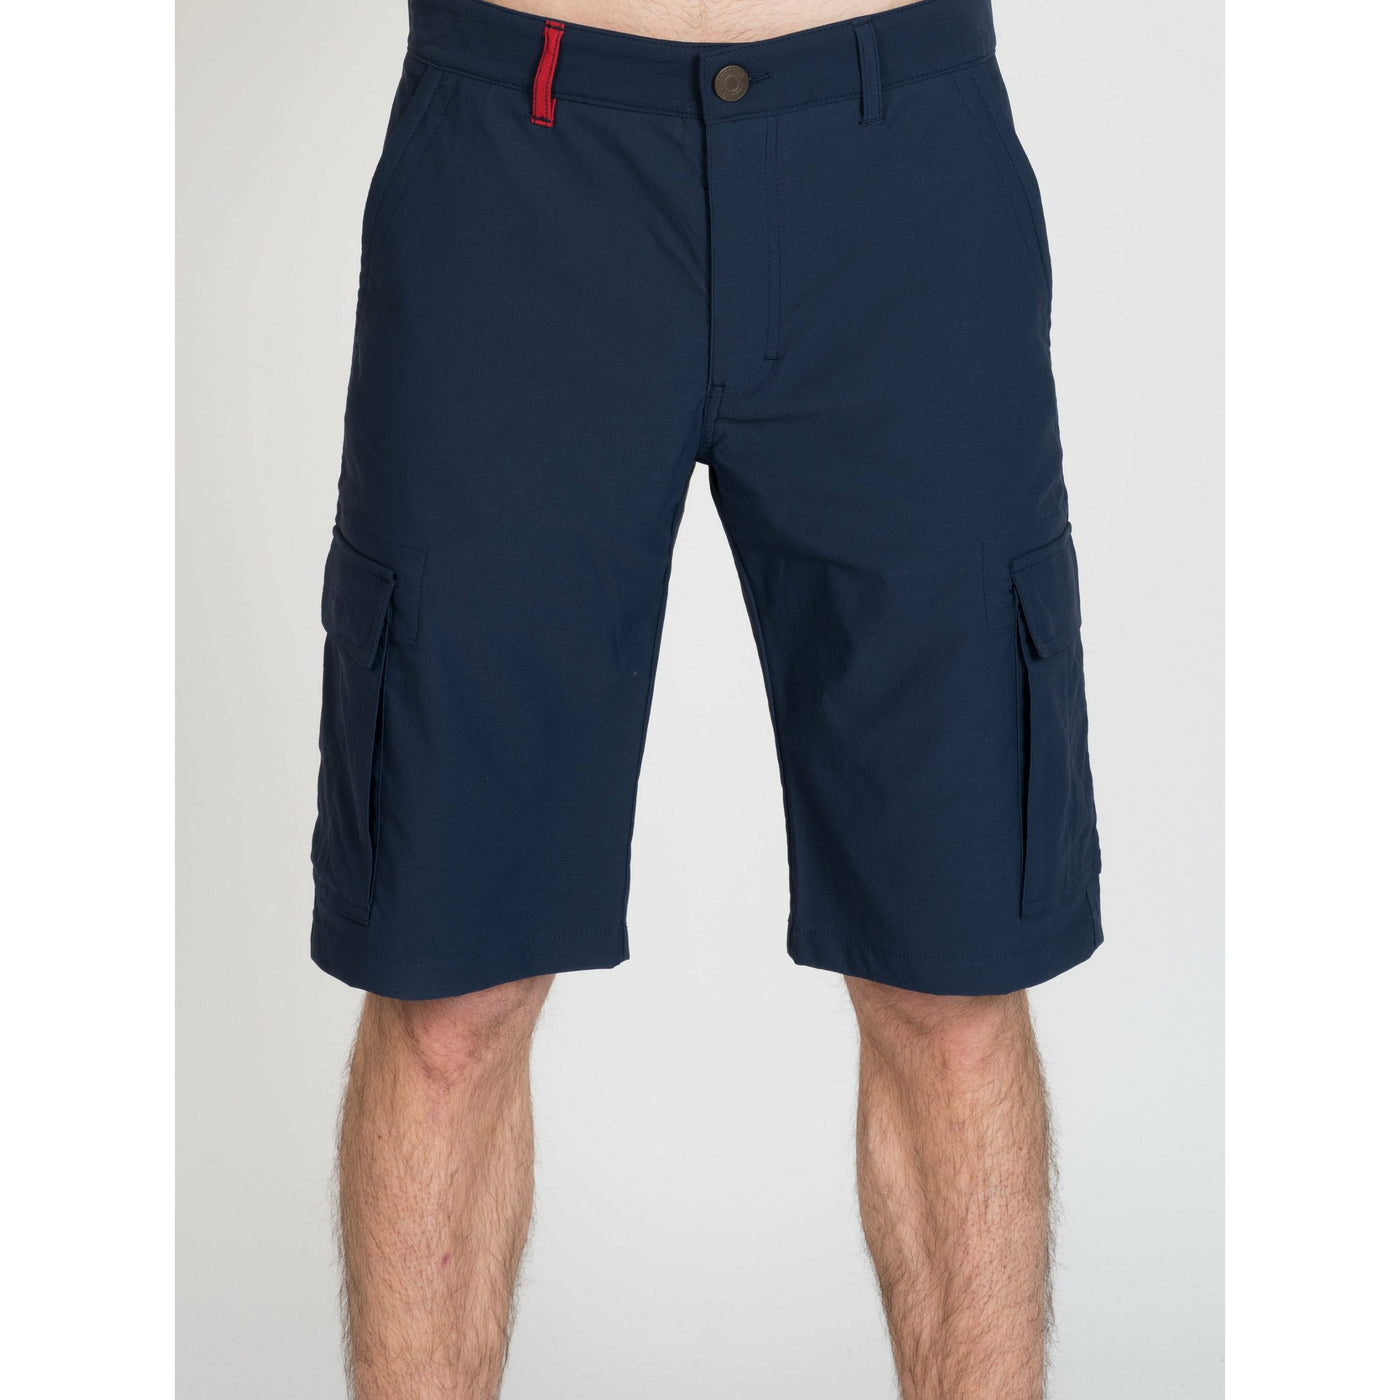 BREDDY'S - shorts Miami Basic #farbe_dark-blue